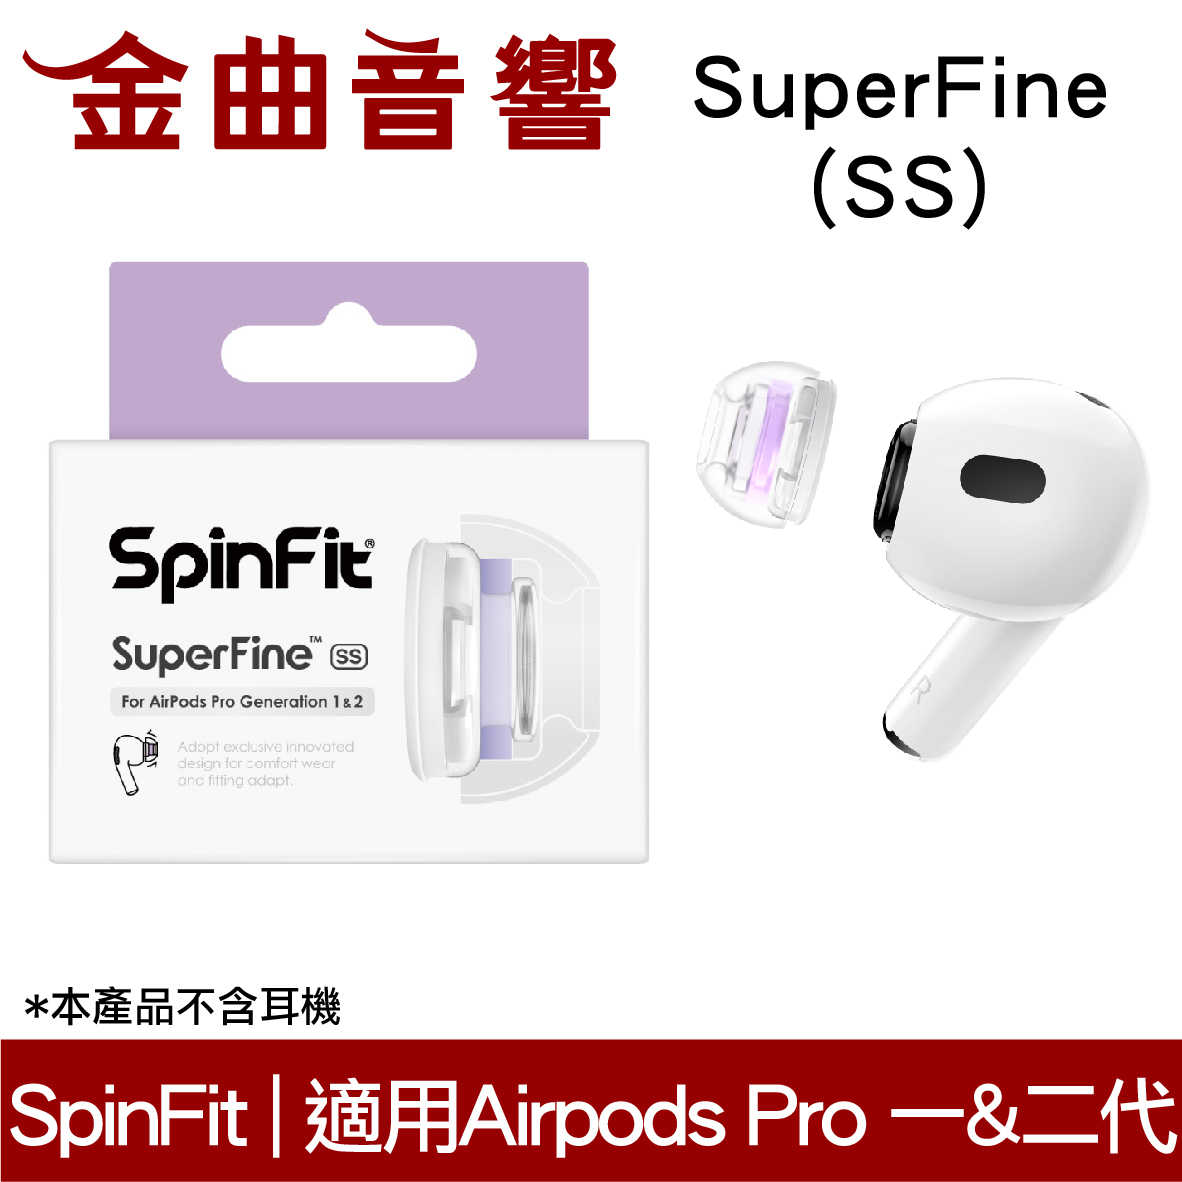 SpinFit SuperFine SS Apple Airpods Pro 適用 矽膠耳塞 CP1025 | 金曲音響